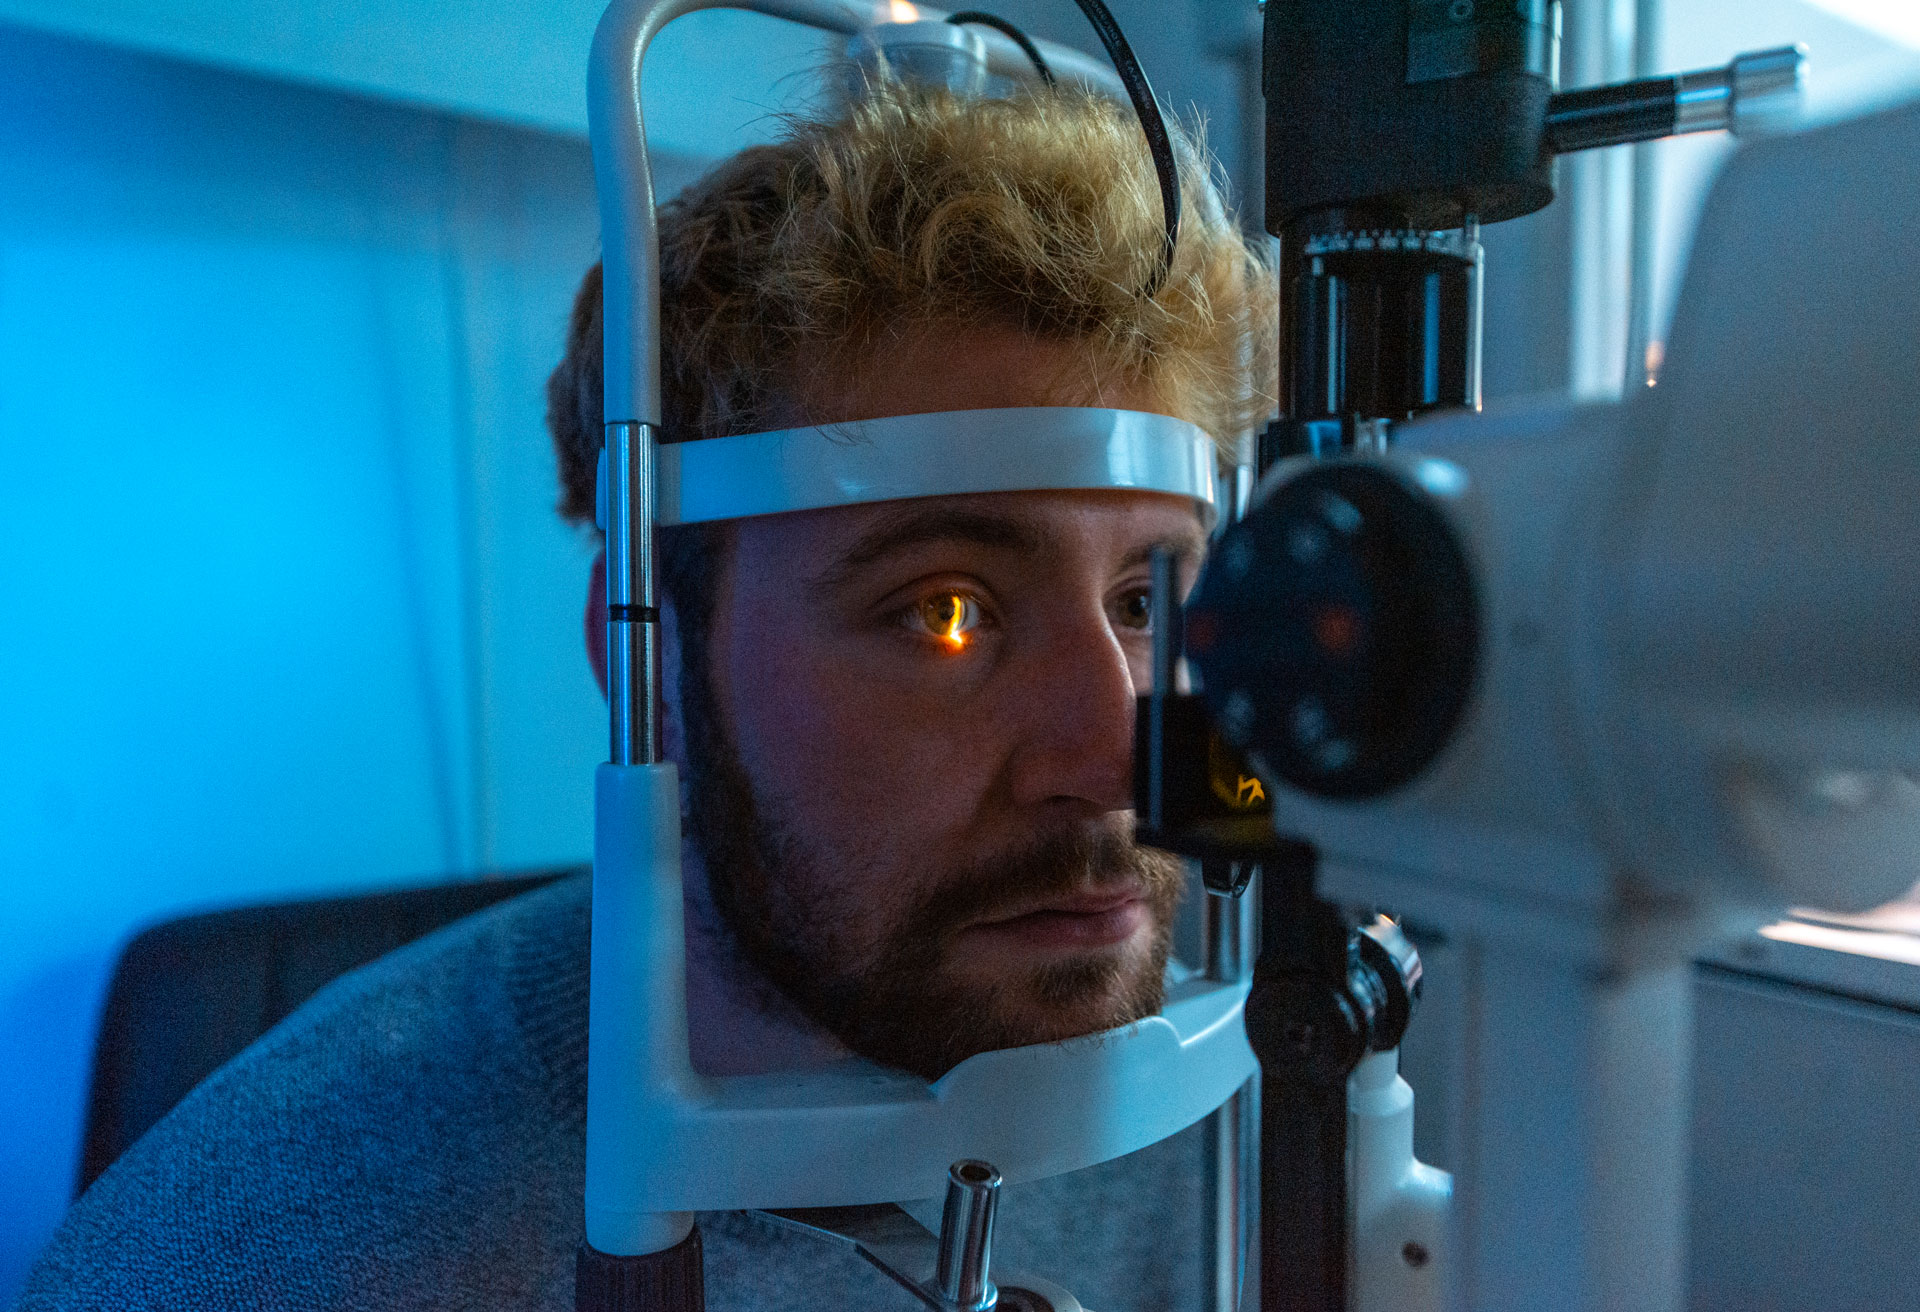 Kontaktlinsen - Untersuchung mit der Spaltlampe | Optiker Filia76 in Kassel